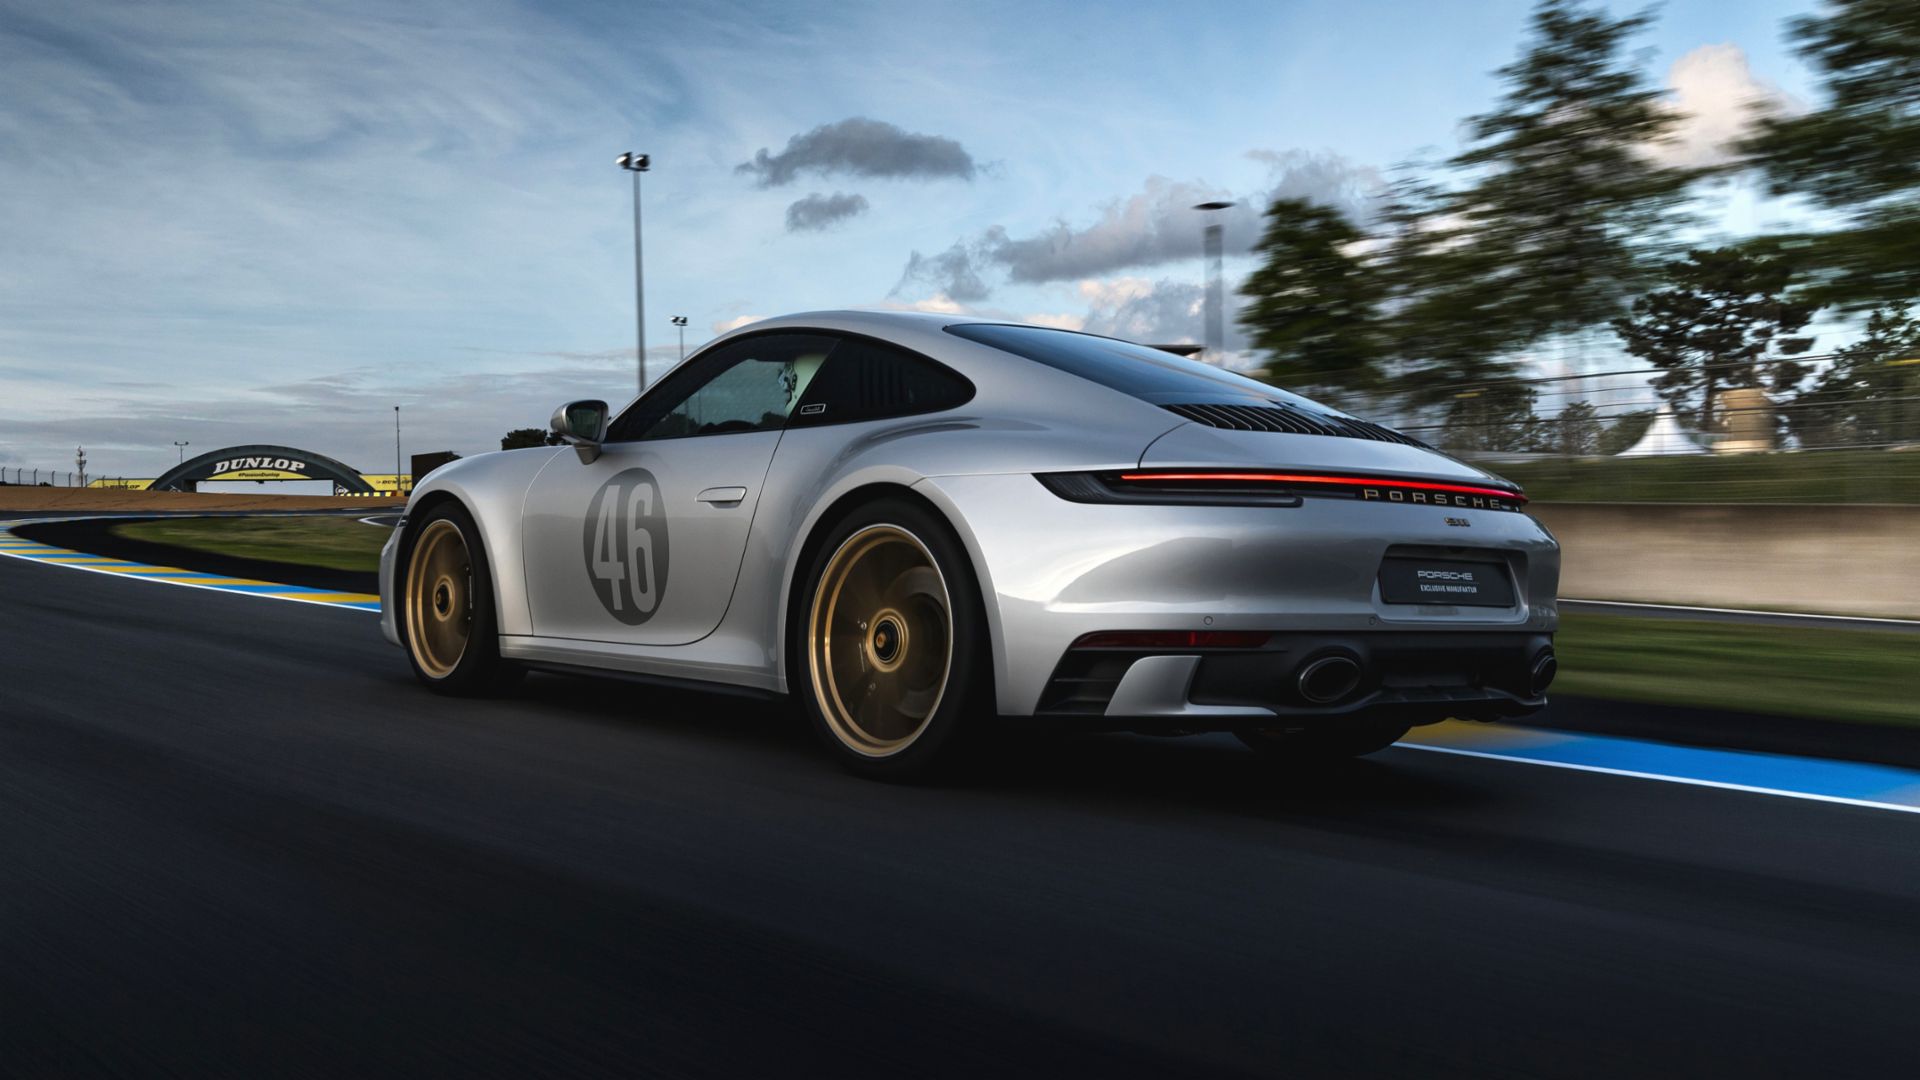 The art of speed - Porsche Newsroom